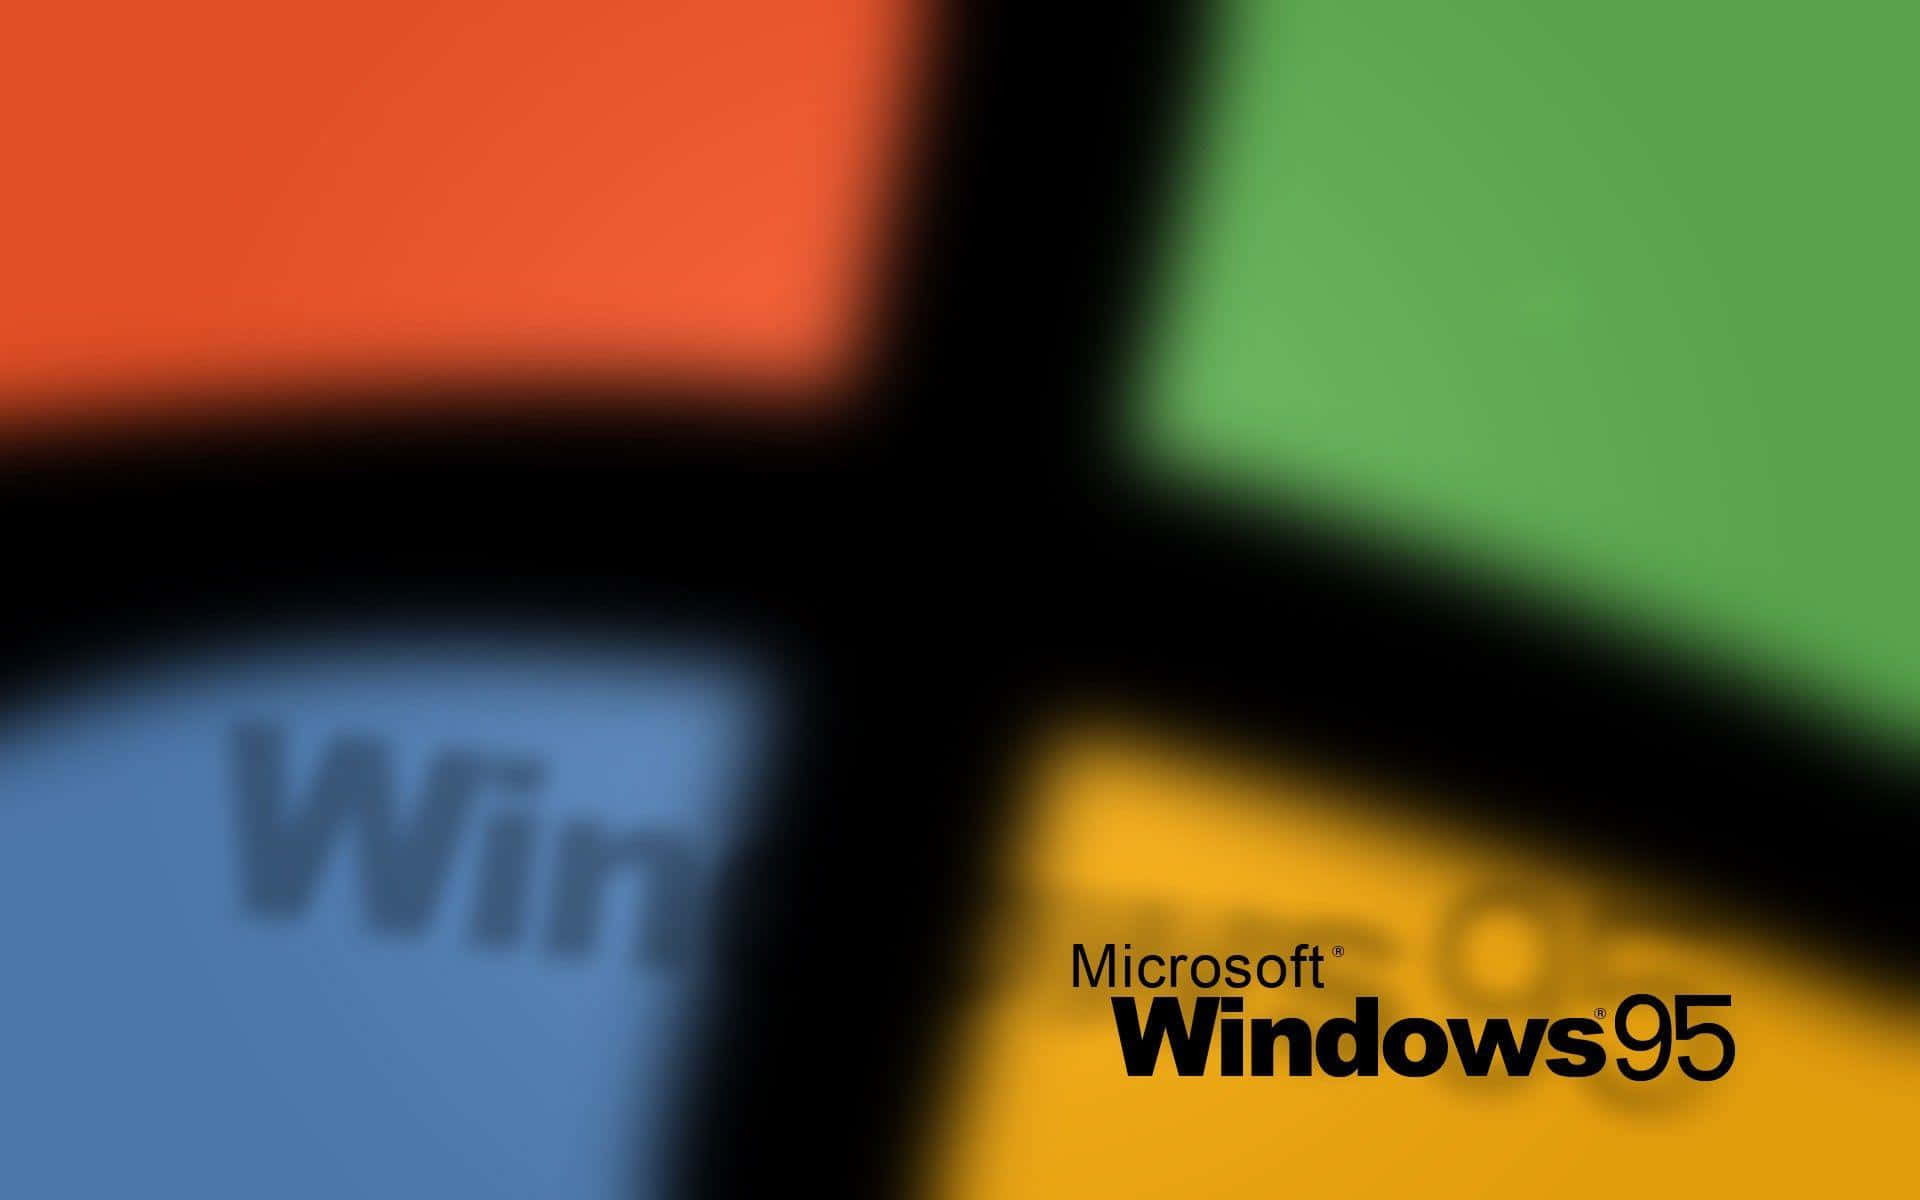 Enjoy the vibrant colors of Windows 95